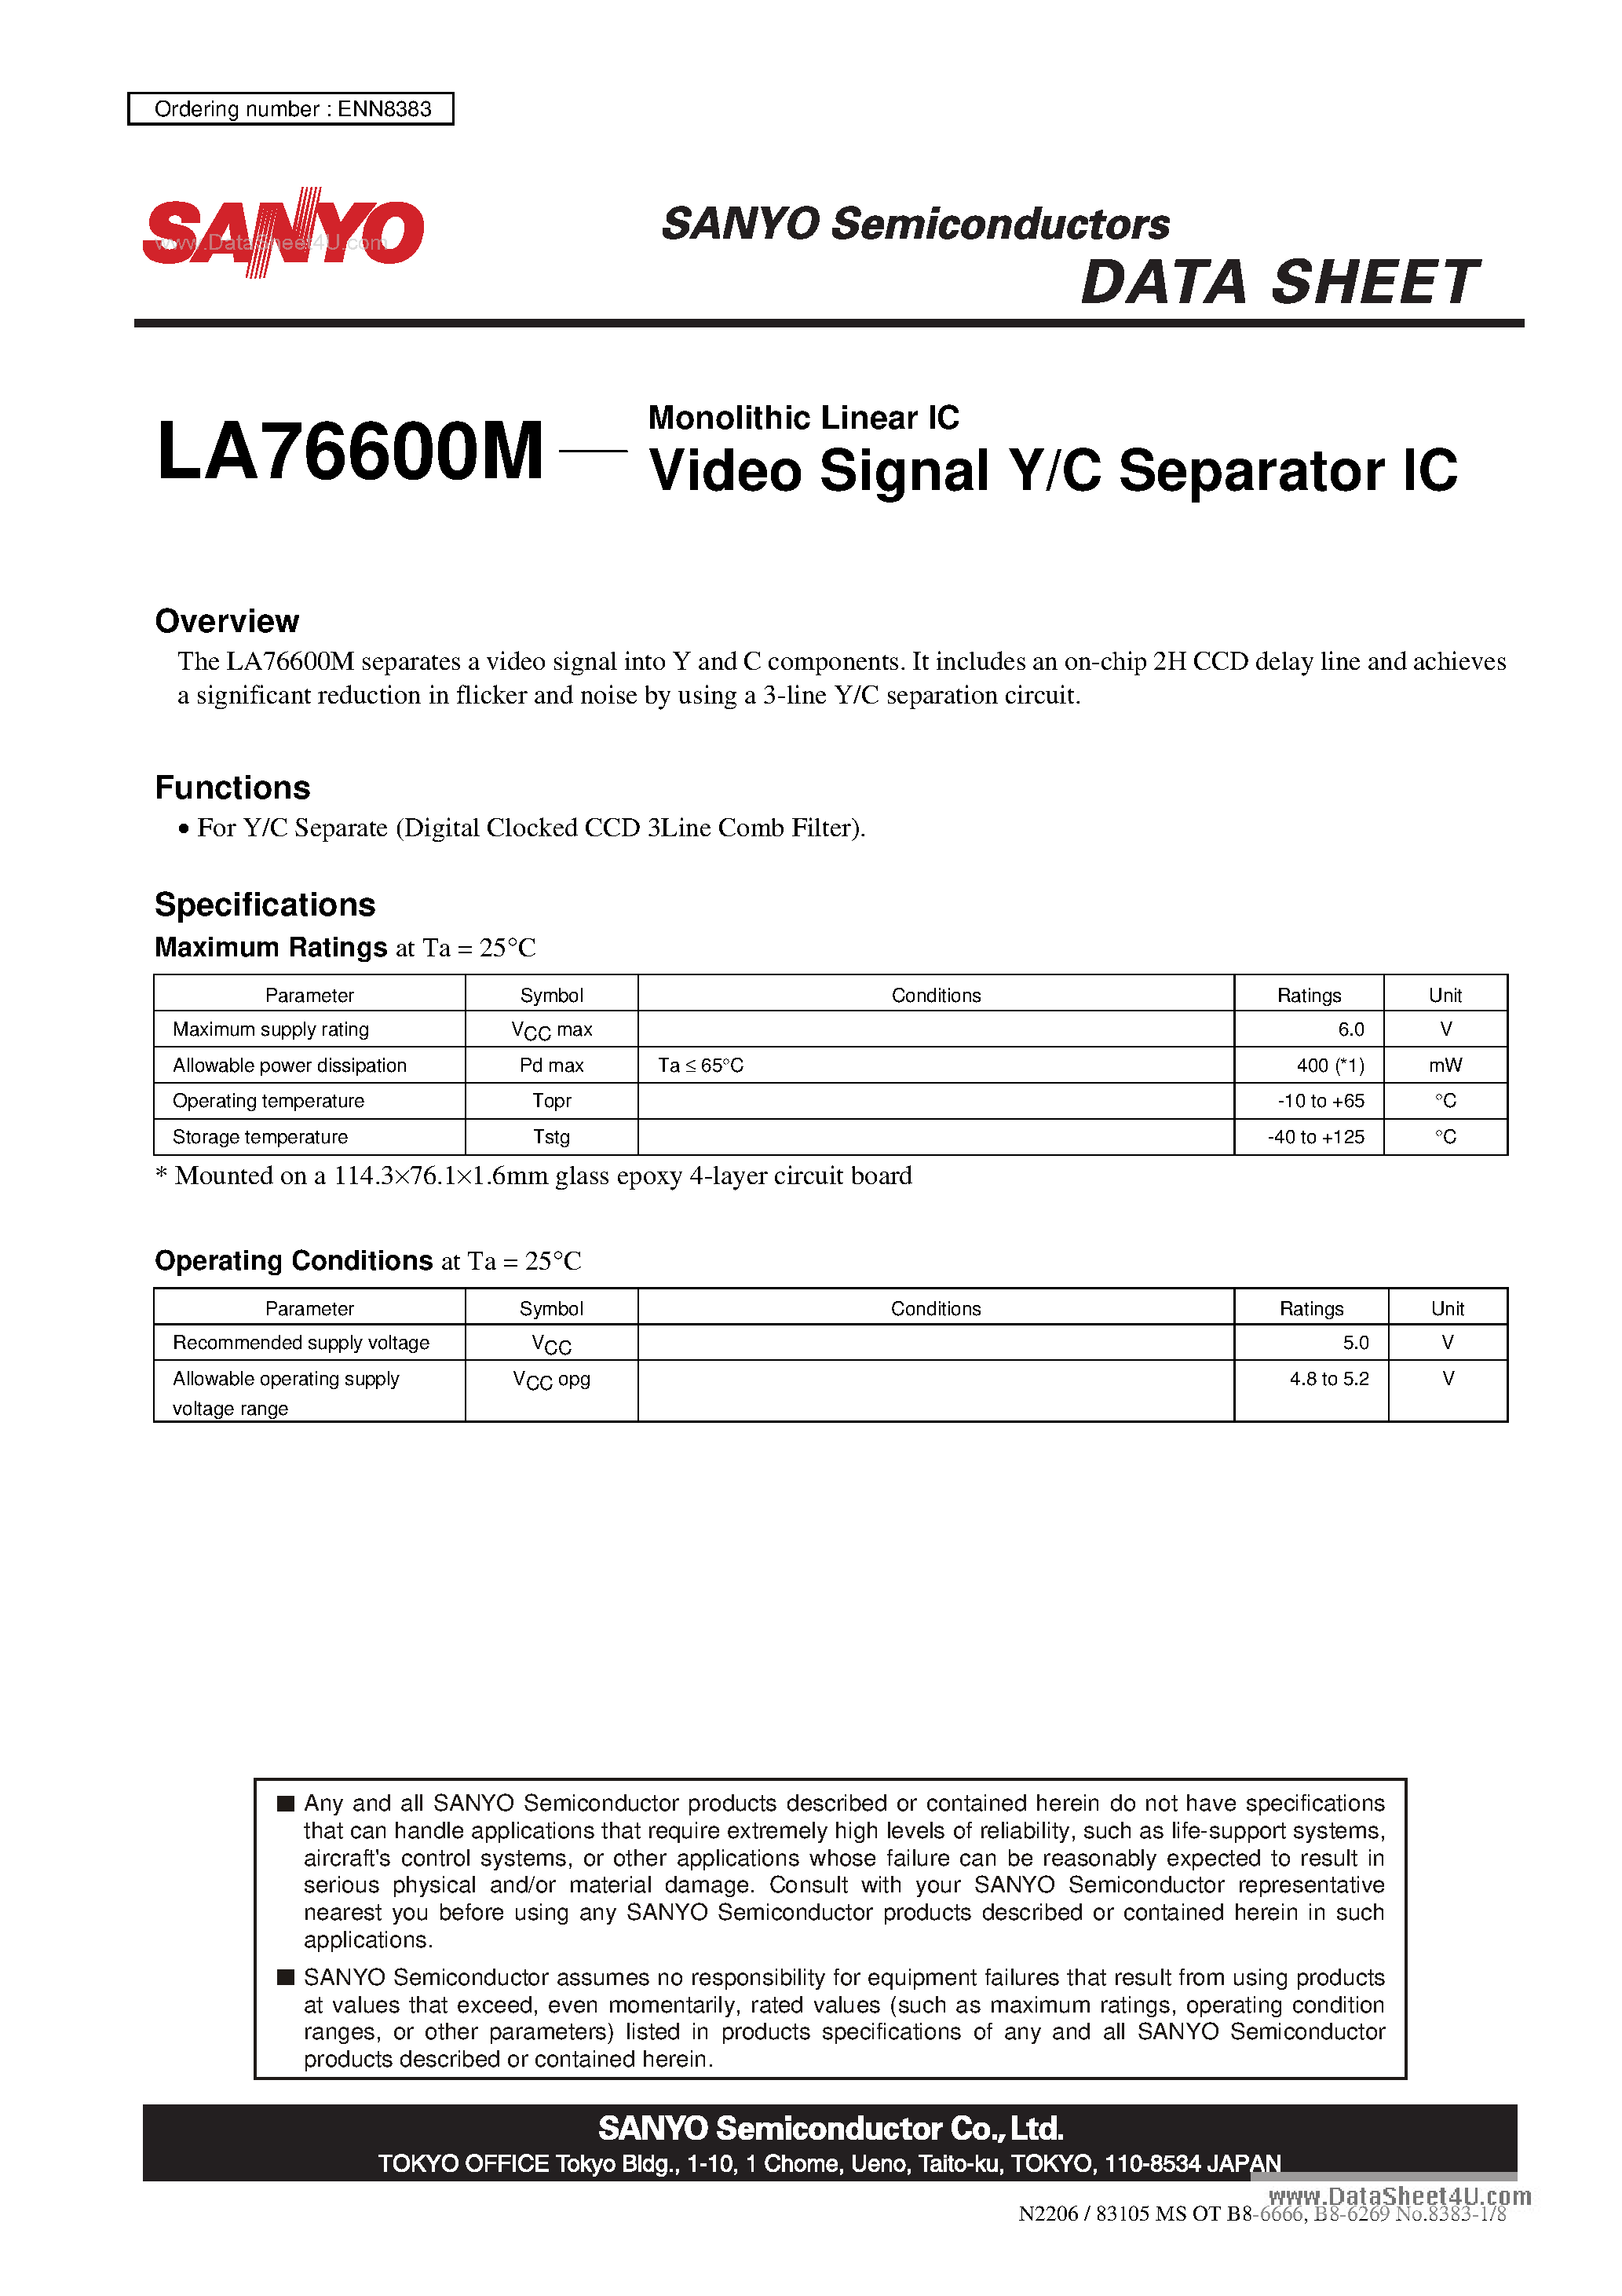 Datasheet LA76600M - Monolithic Linear IC Video Signal Y/C Separator IC page 1